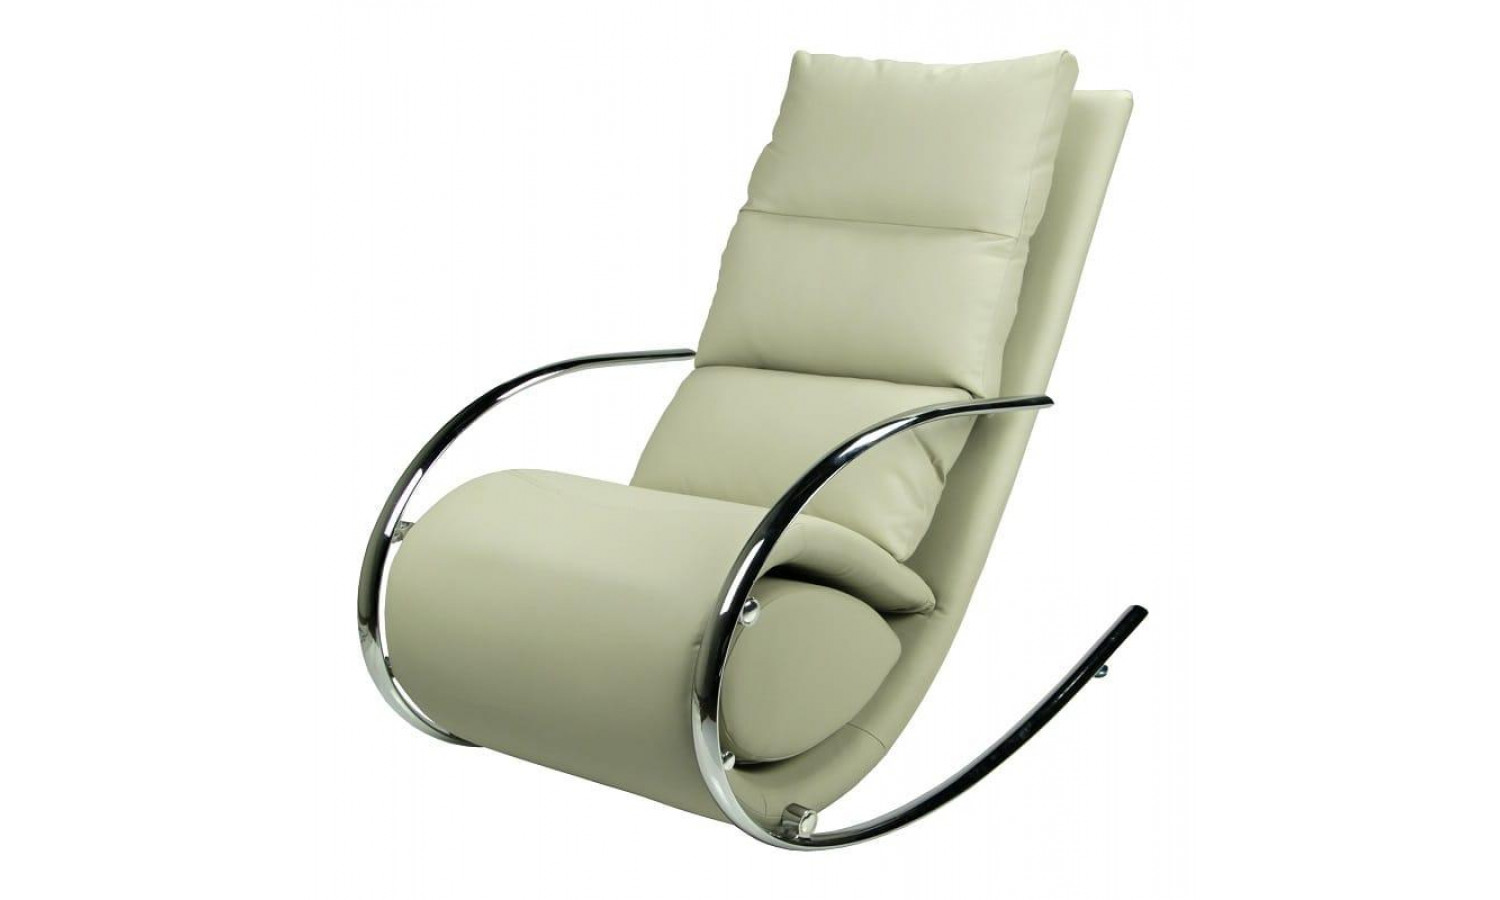 Кресло-качалка  MK-5503-BG с пуфом 67х102х111 см Бежевый